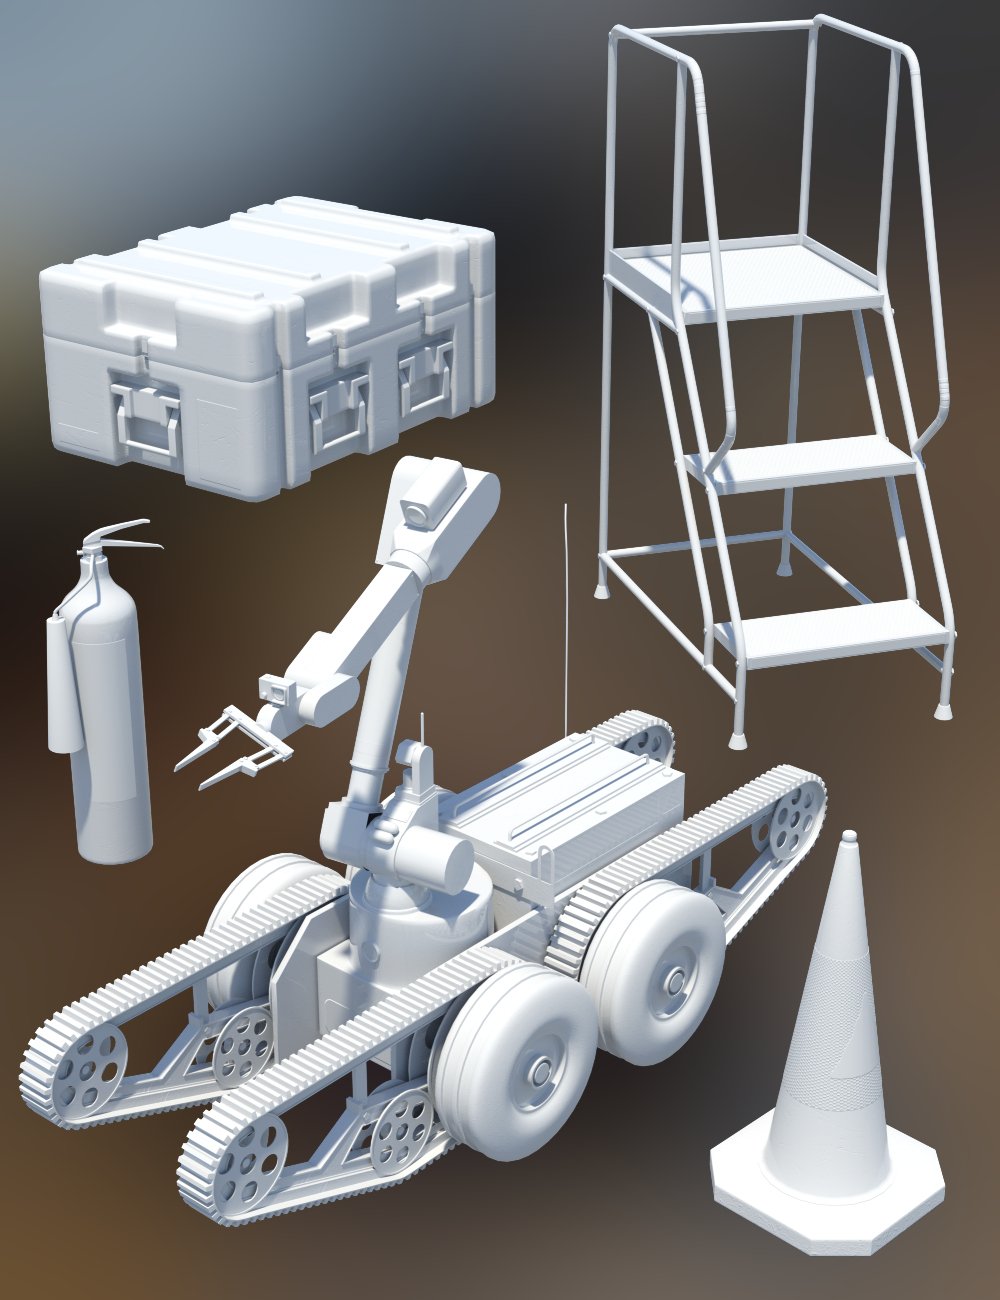 Supercollider Clutter by: Merlin Studios, 3D Models by Daz 3D